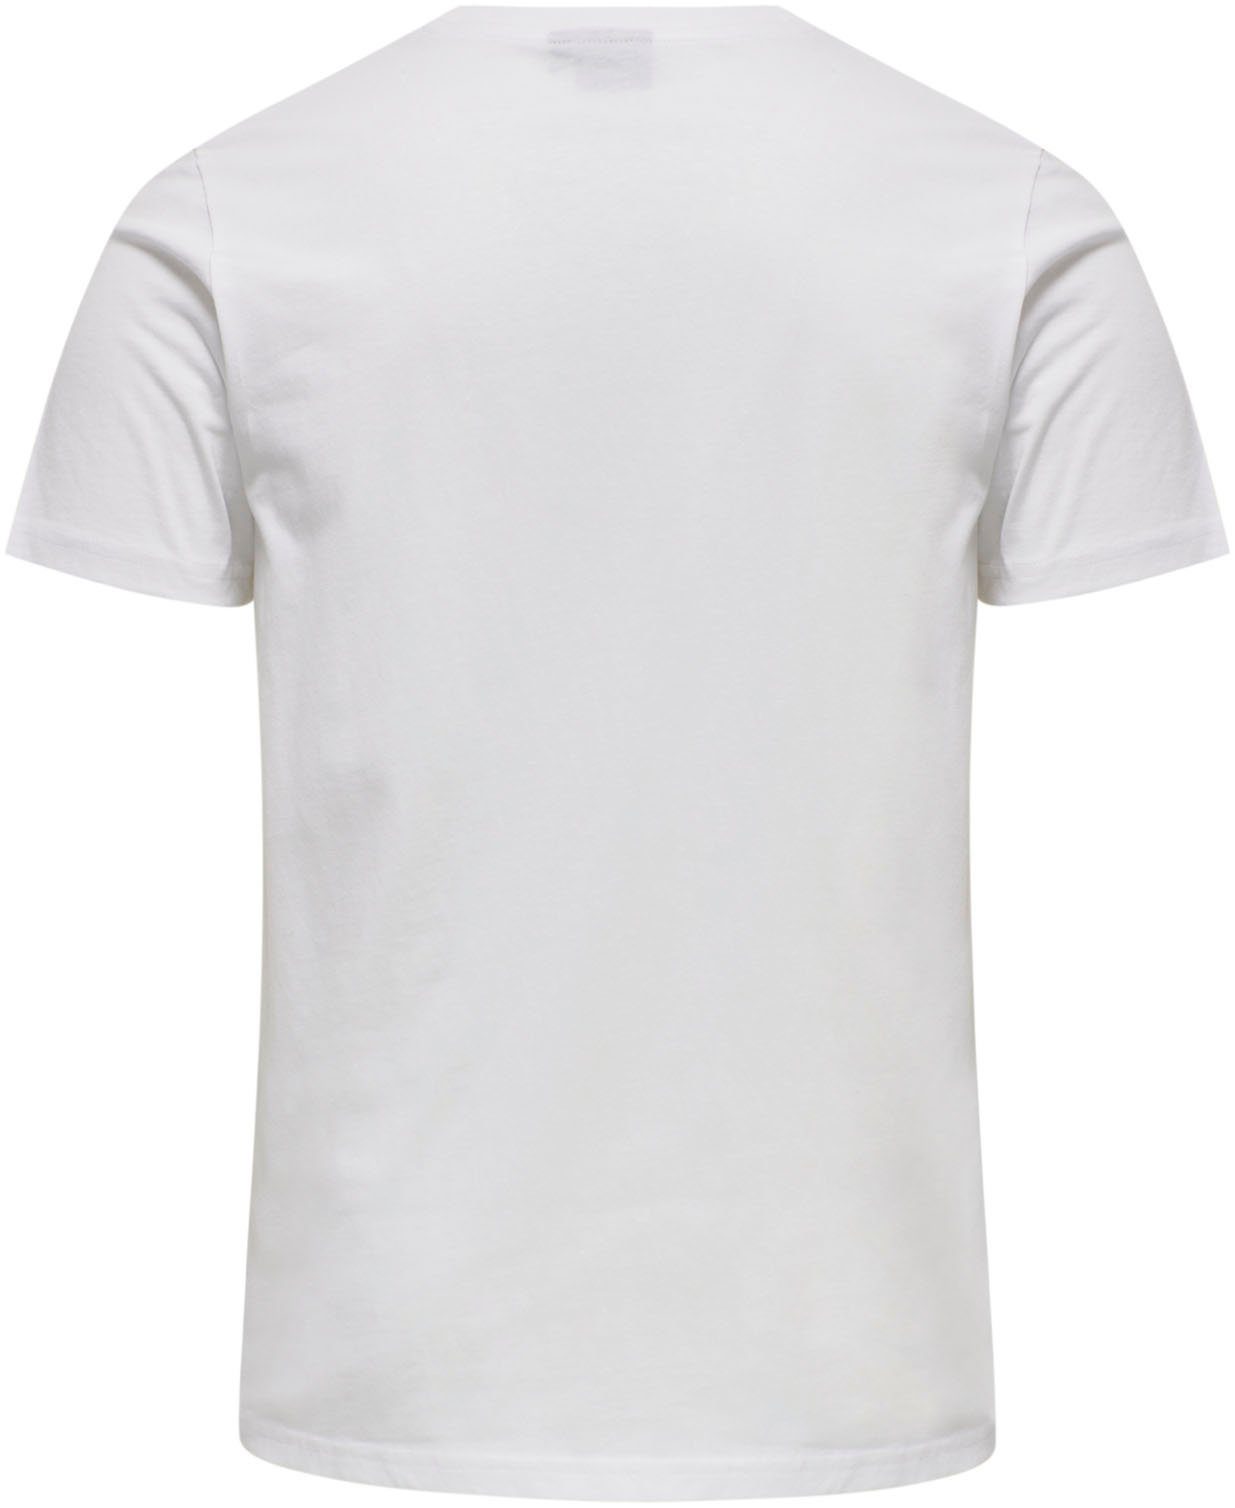 white hummel T-Shirt mit Logo Print